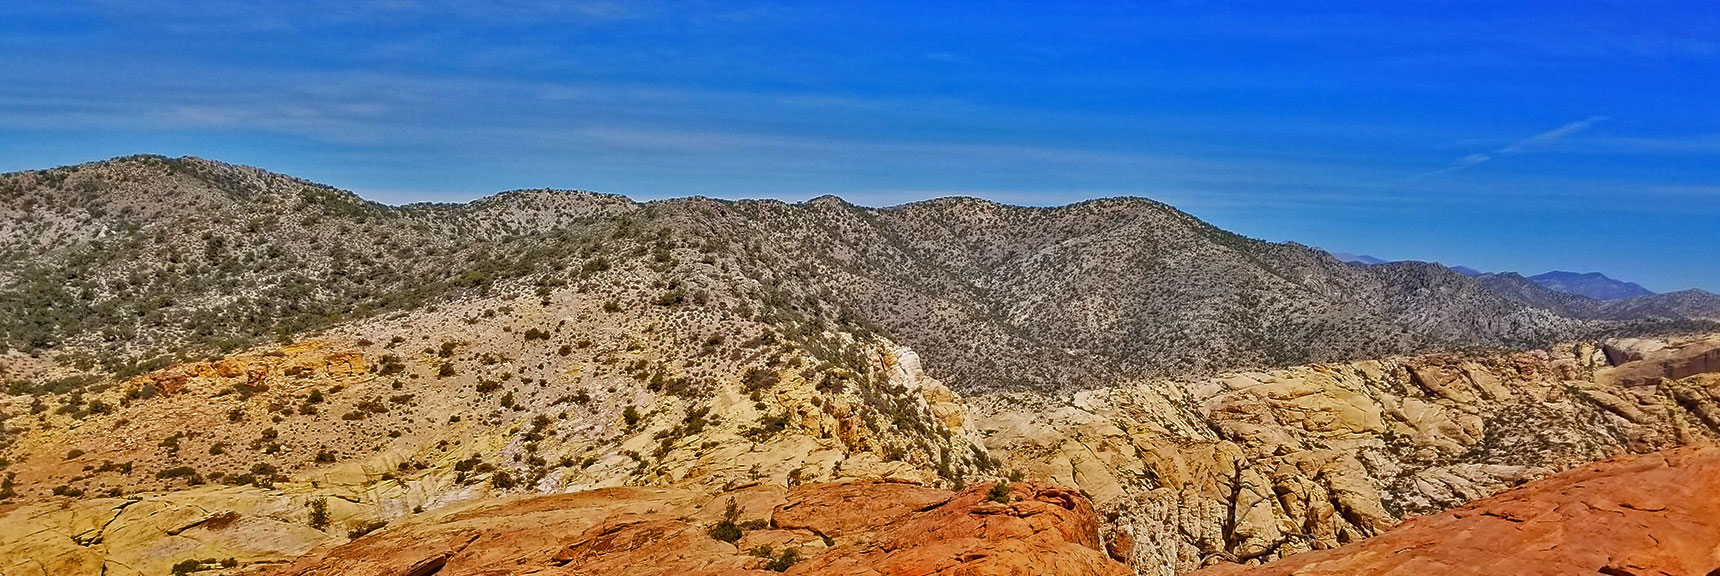 Southern Rainbow Mountains Upper Crest Ridge | Rainbow Mountain Wilderness, Nevada